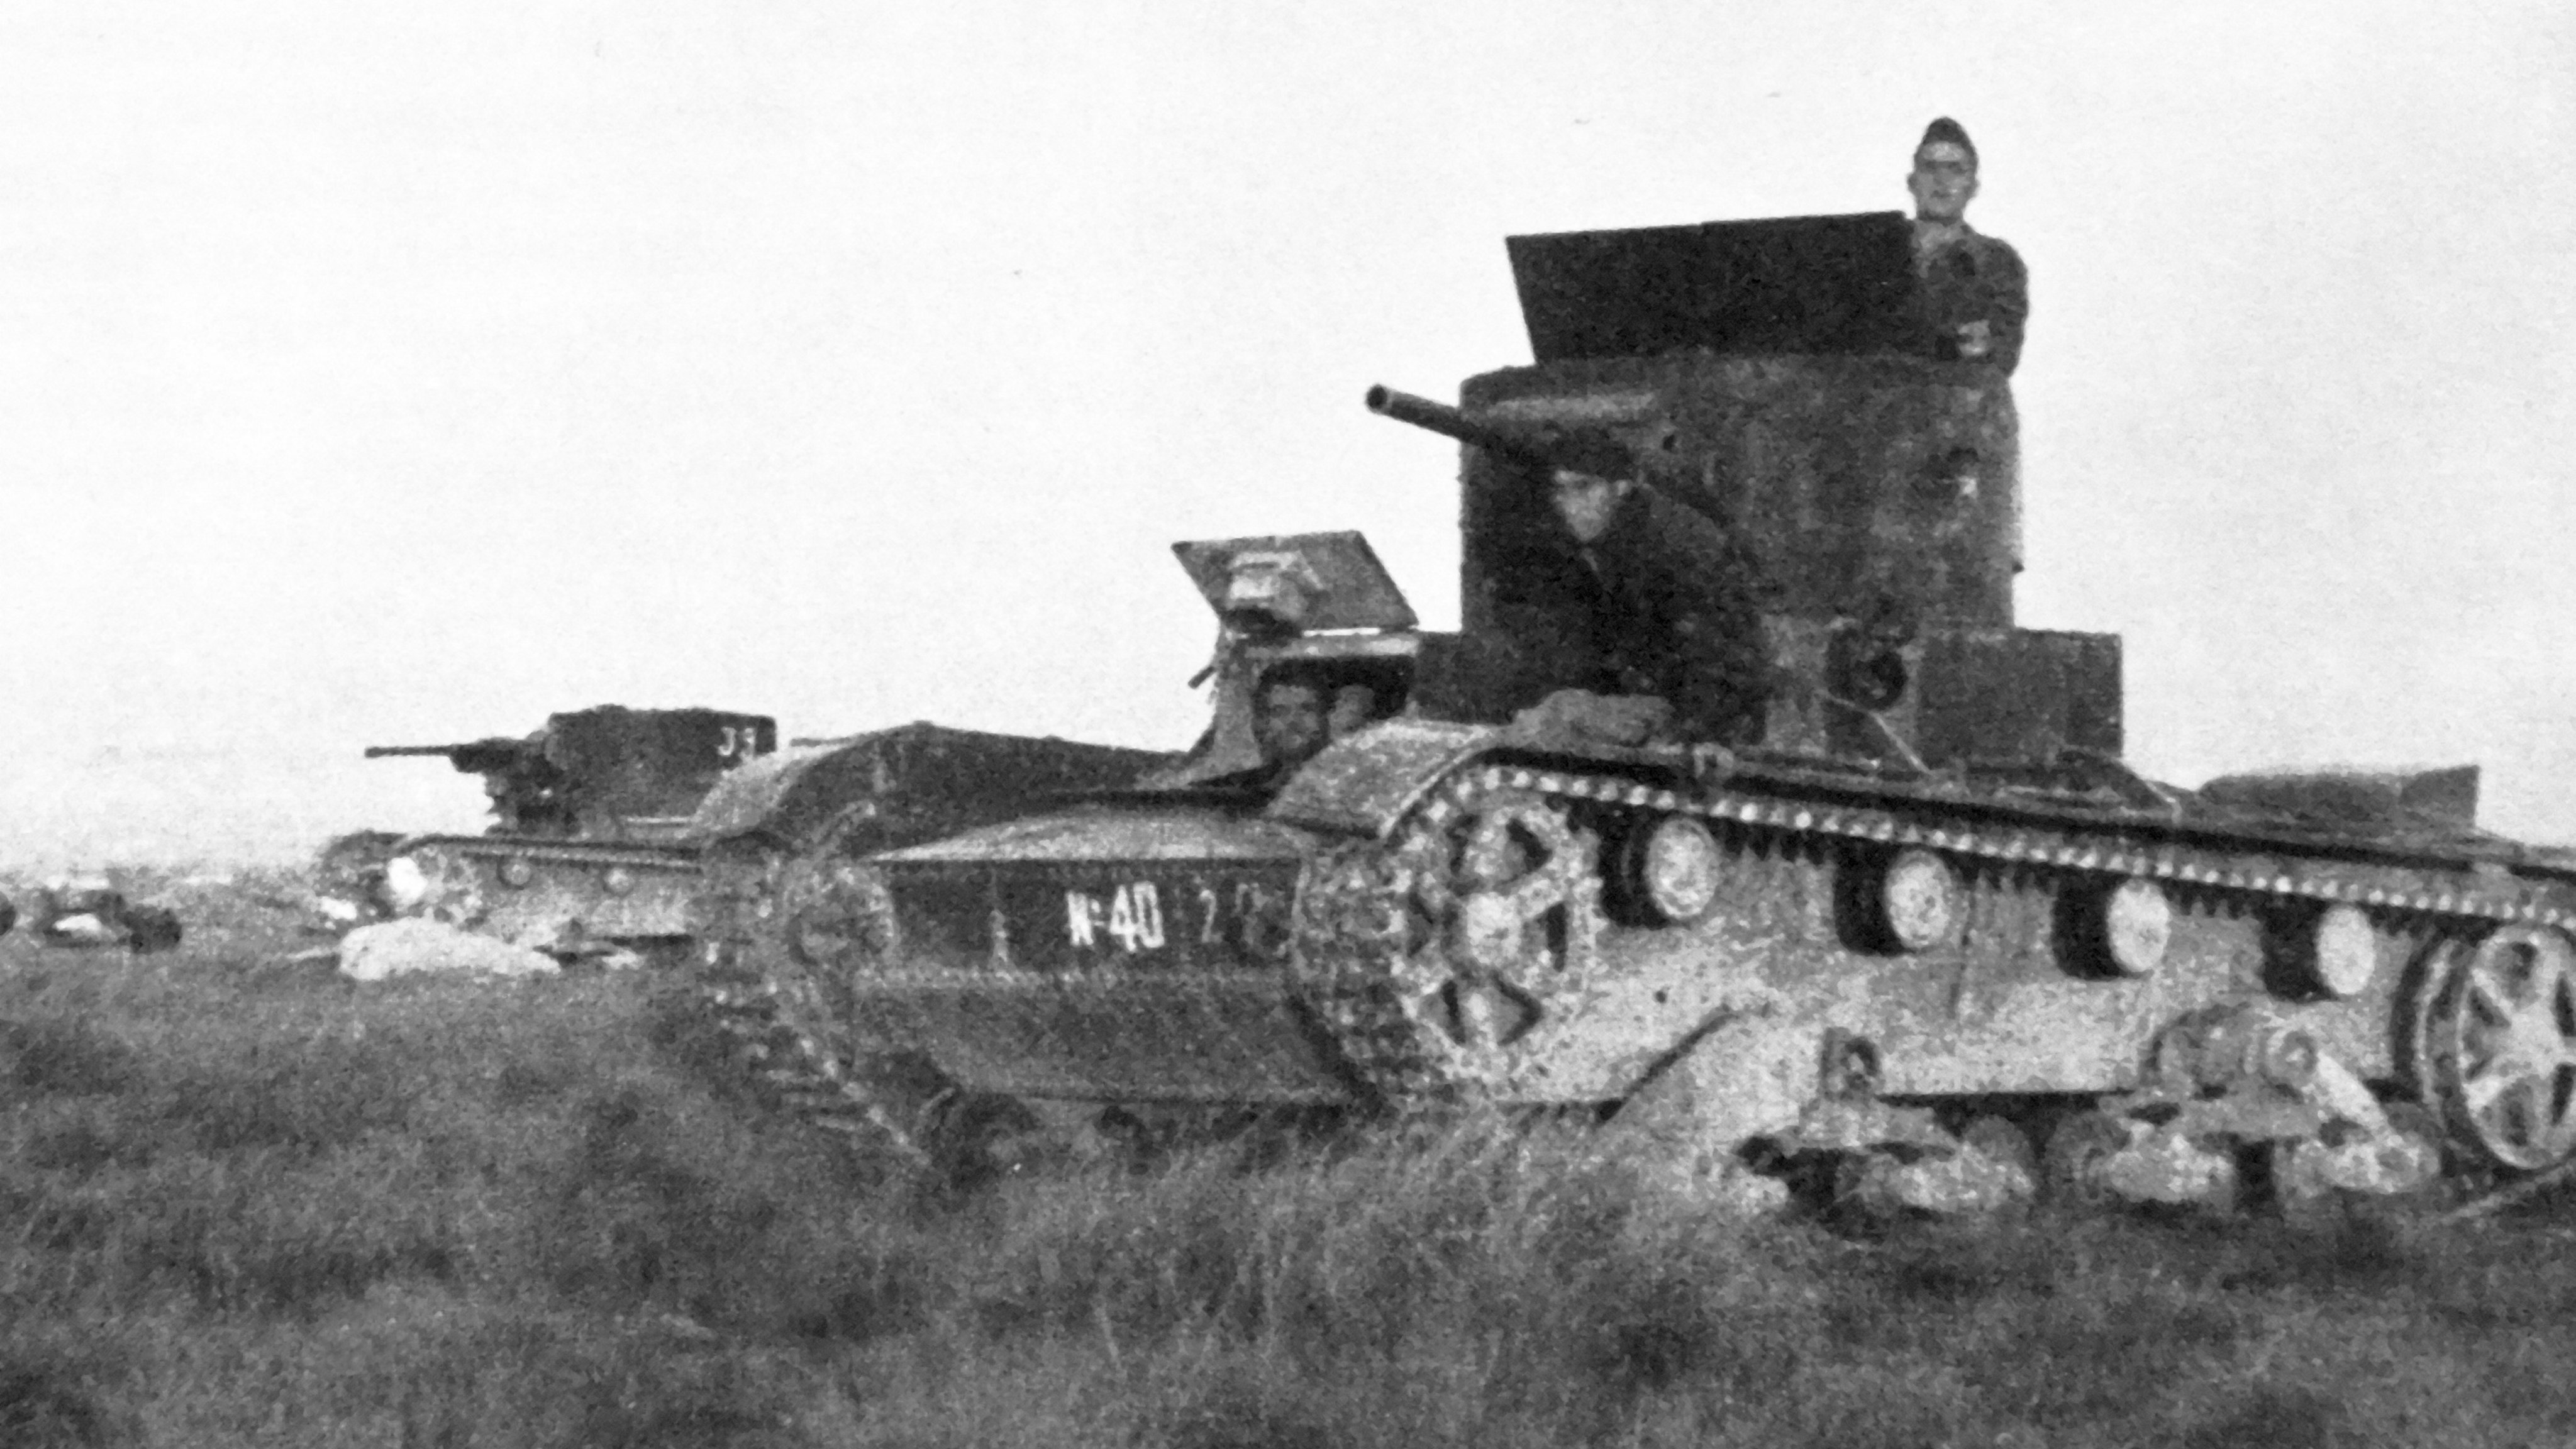 Soviet Russian tanks, during the Spanish Civil War.